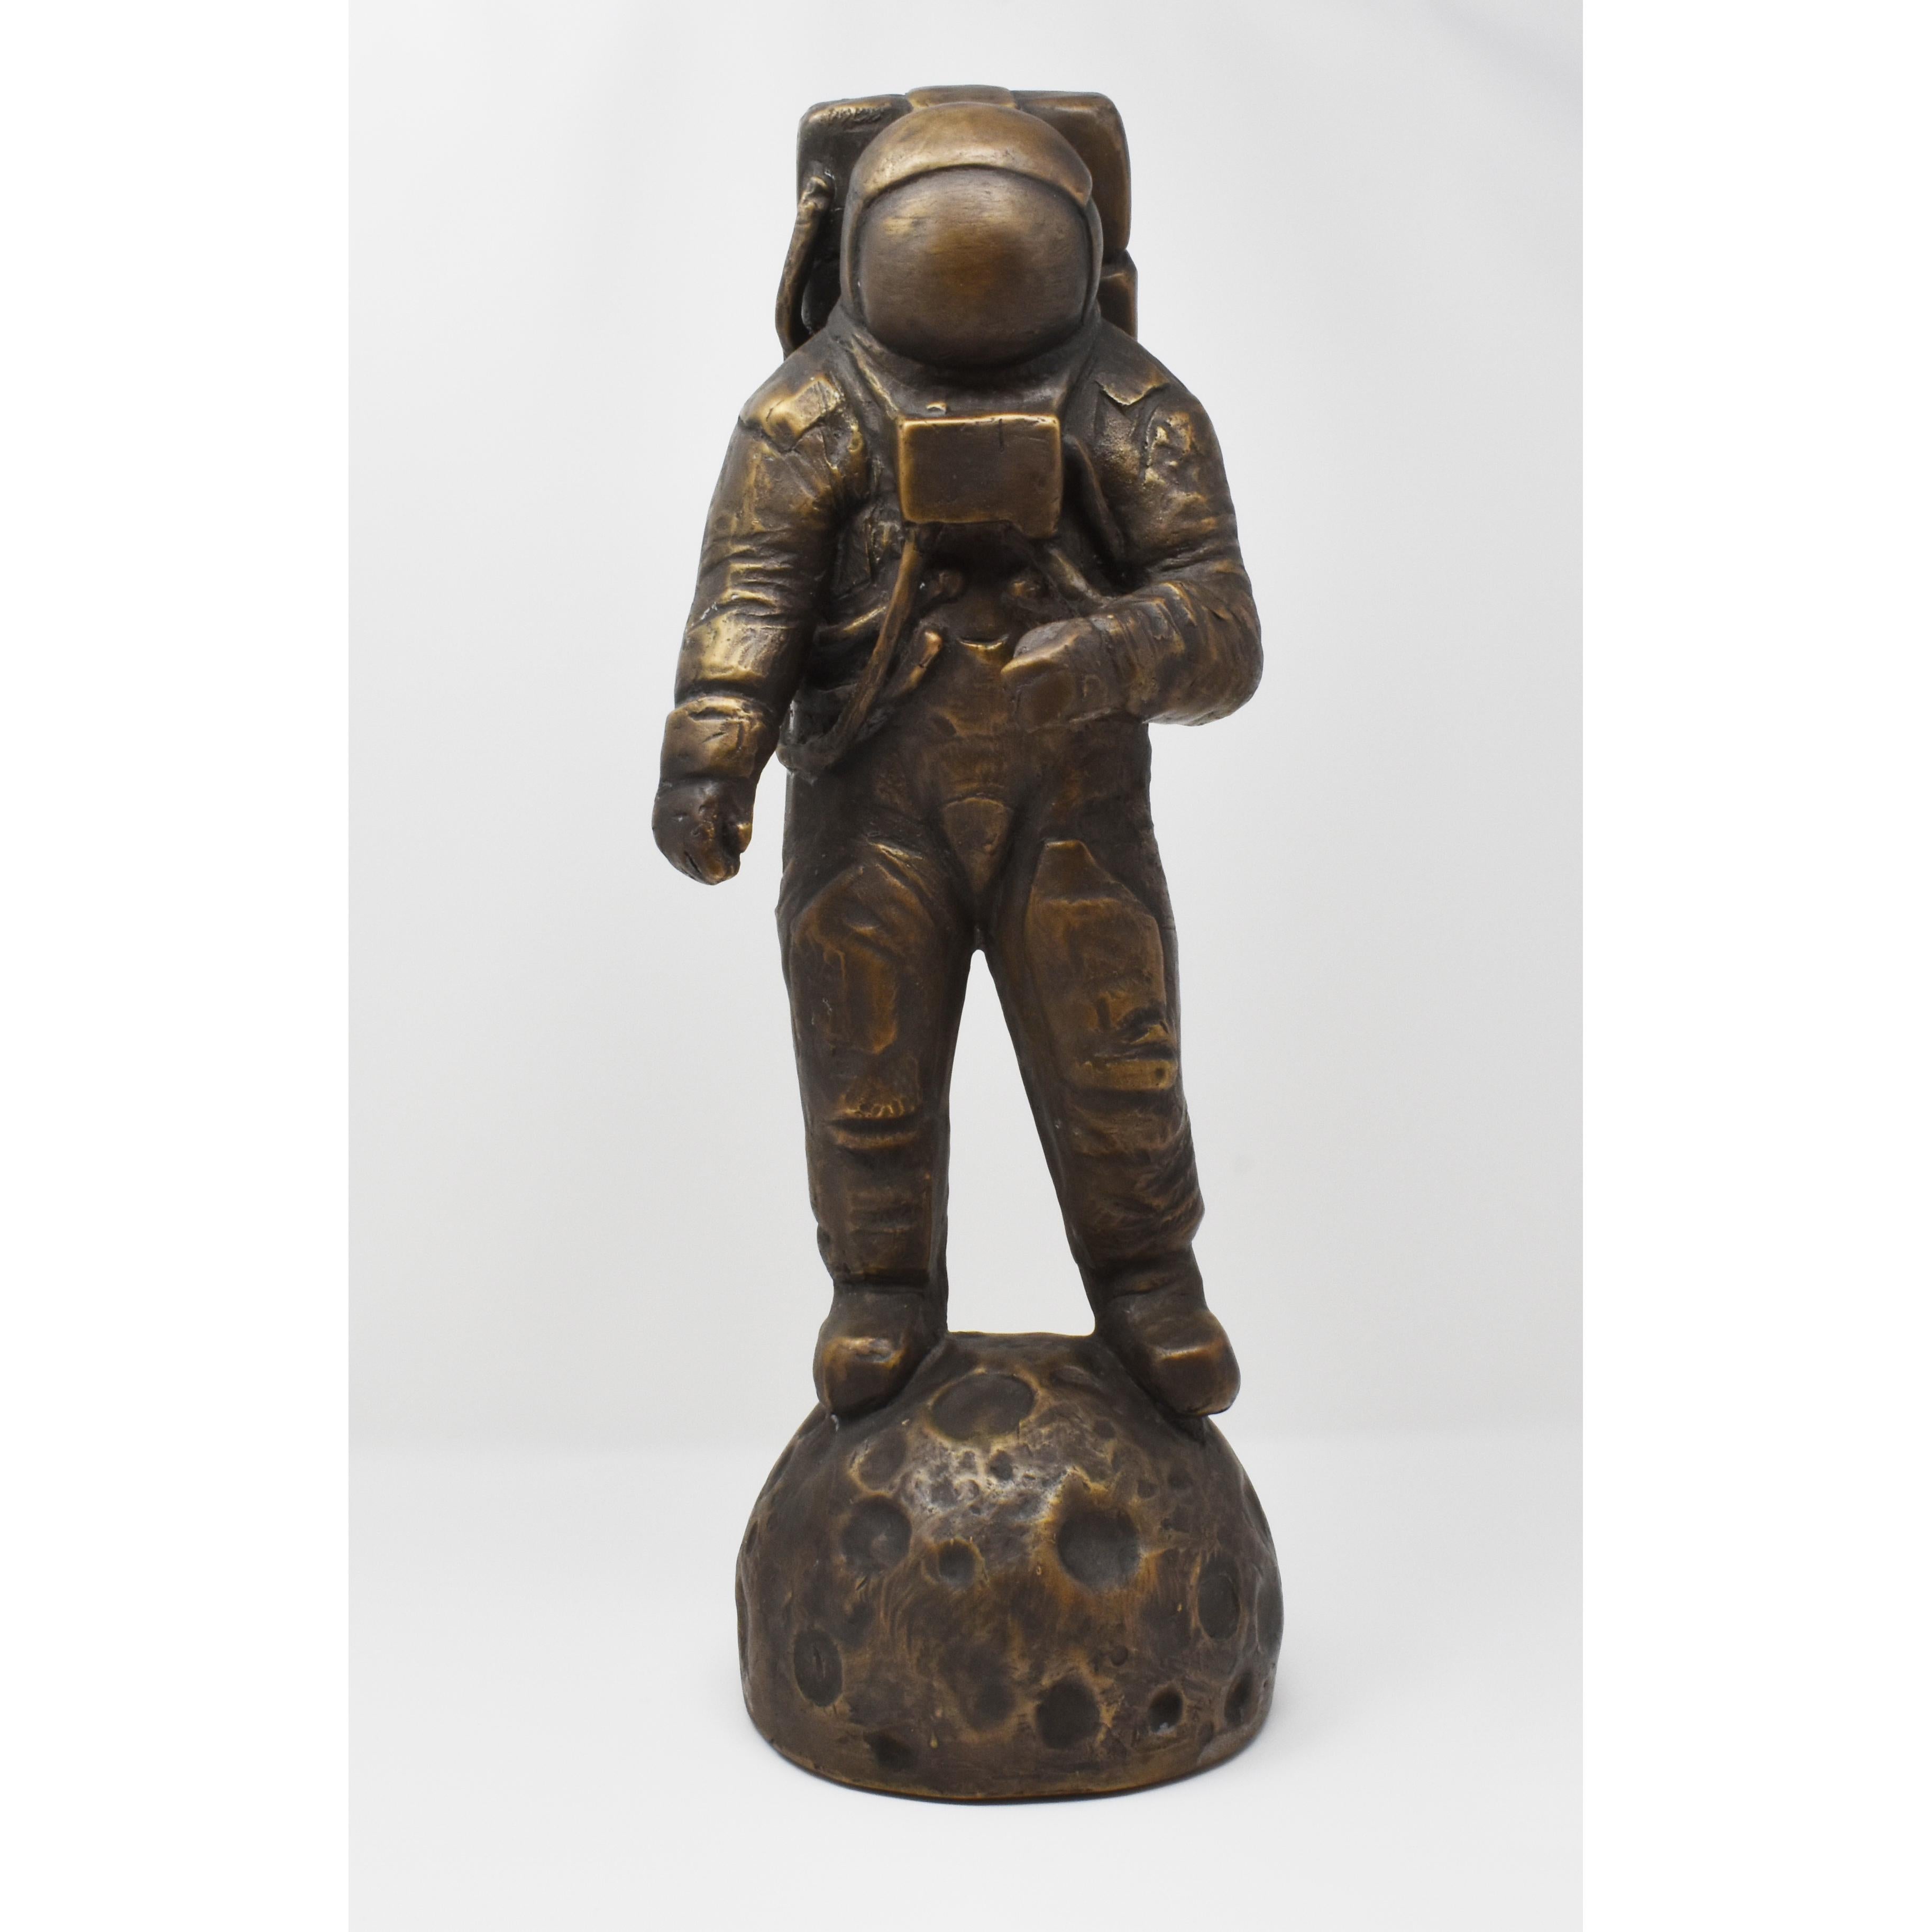 Kevin Christison Figurative Sculpture - The Apollo Bronze - Man on the Moon AP/100